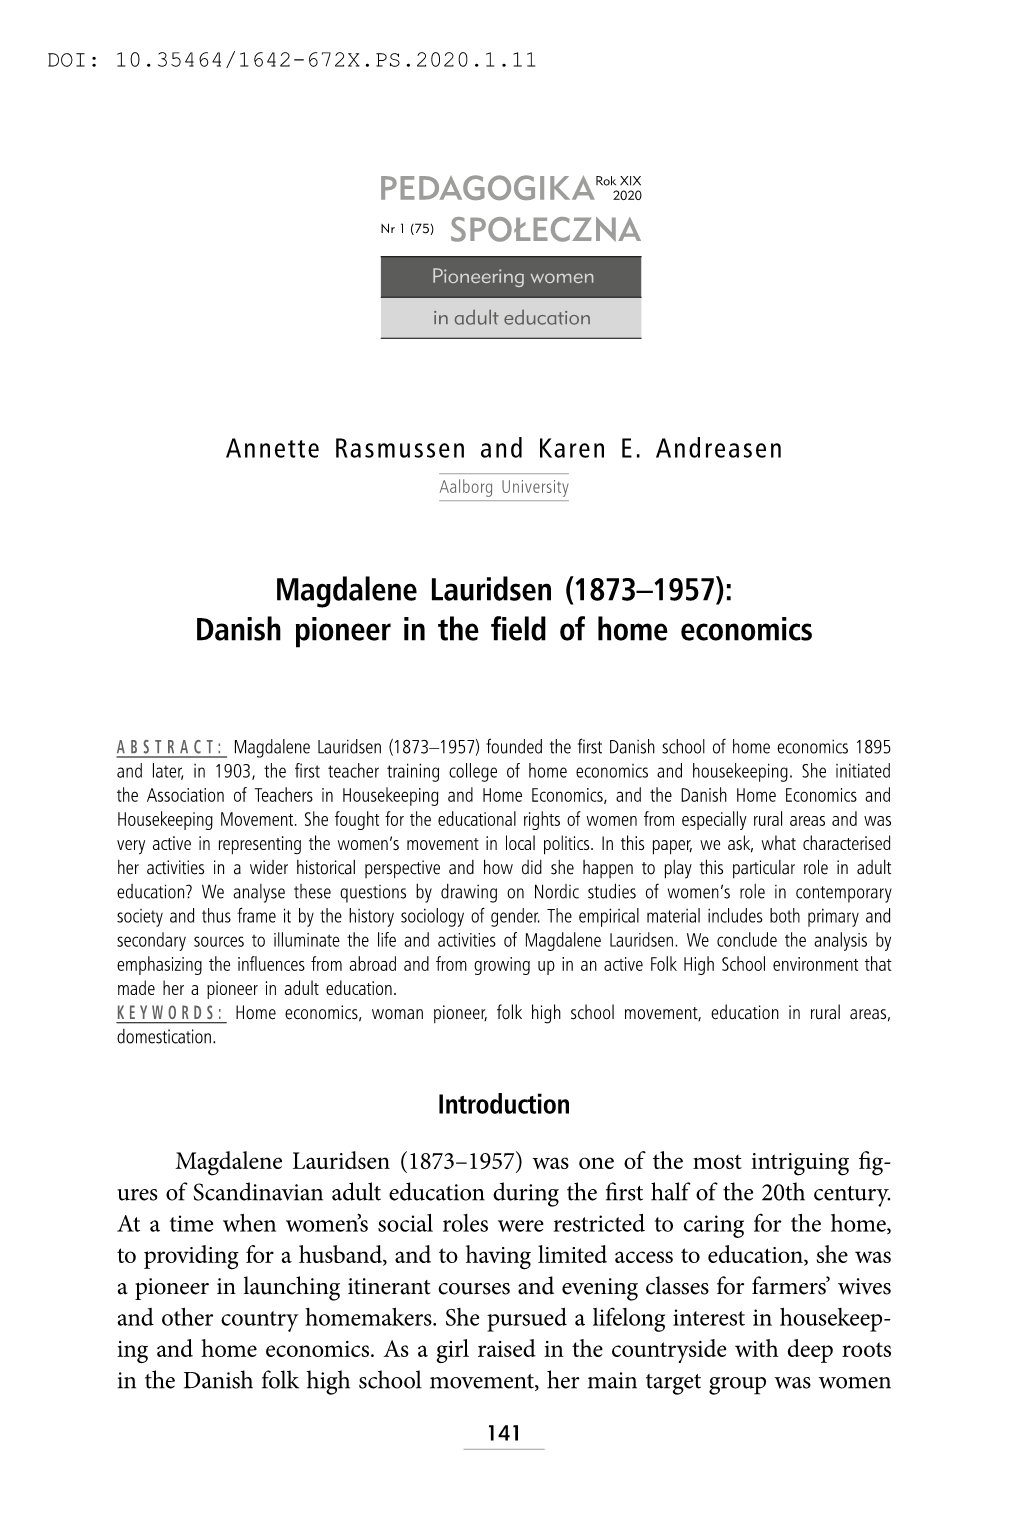 Magdalene Lauridsen (1873–1957): Danish Pioneer in the Field of Home Economics